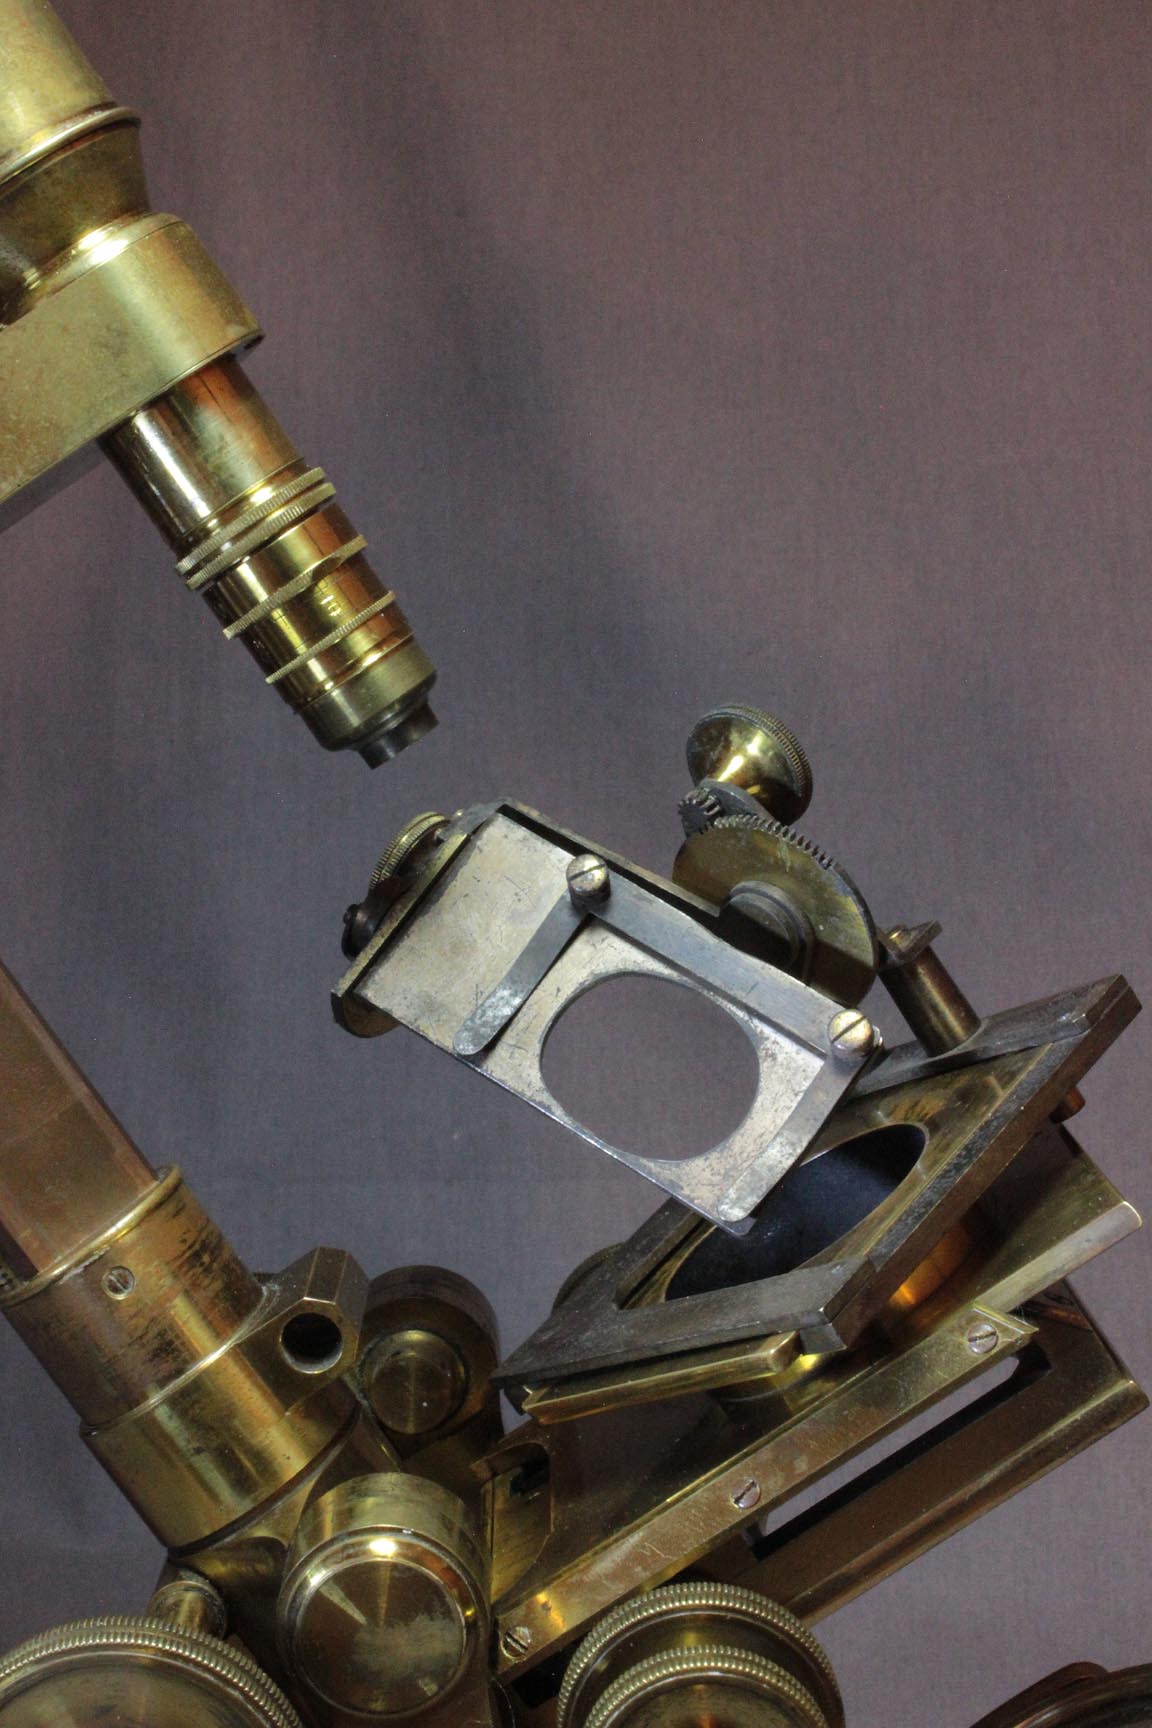  Goniometer on microscope